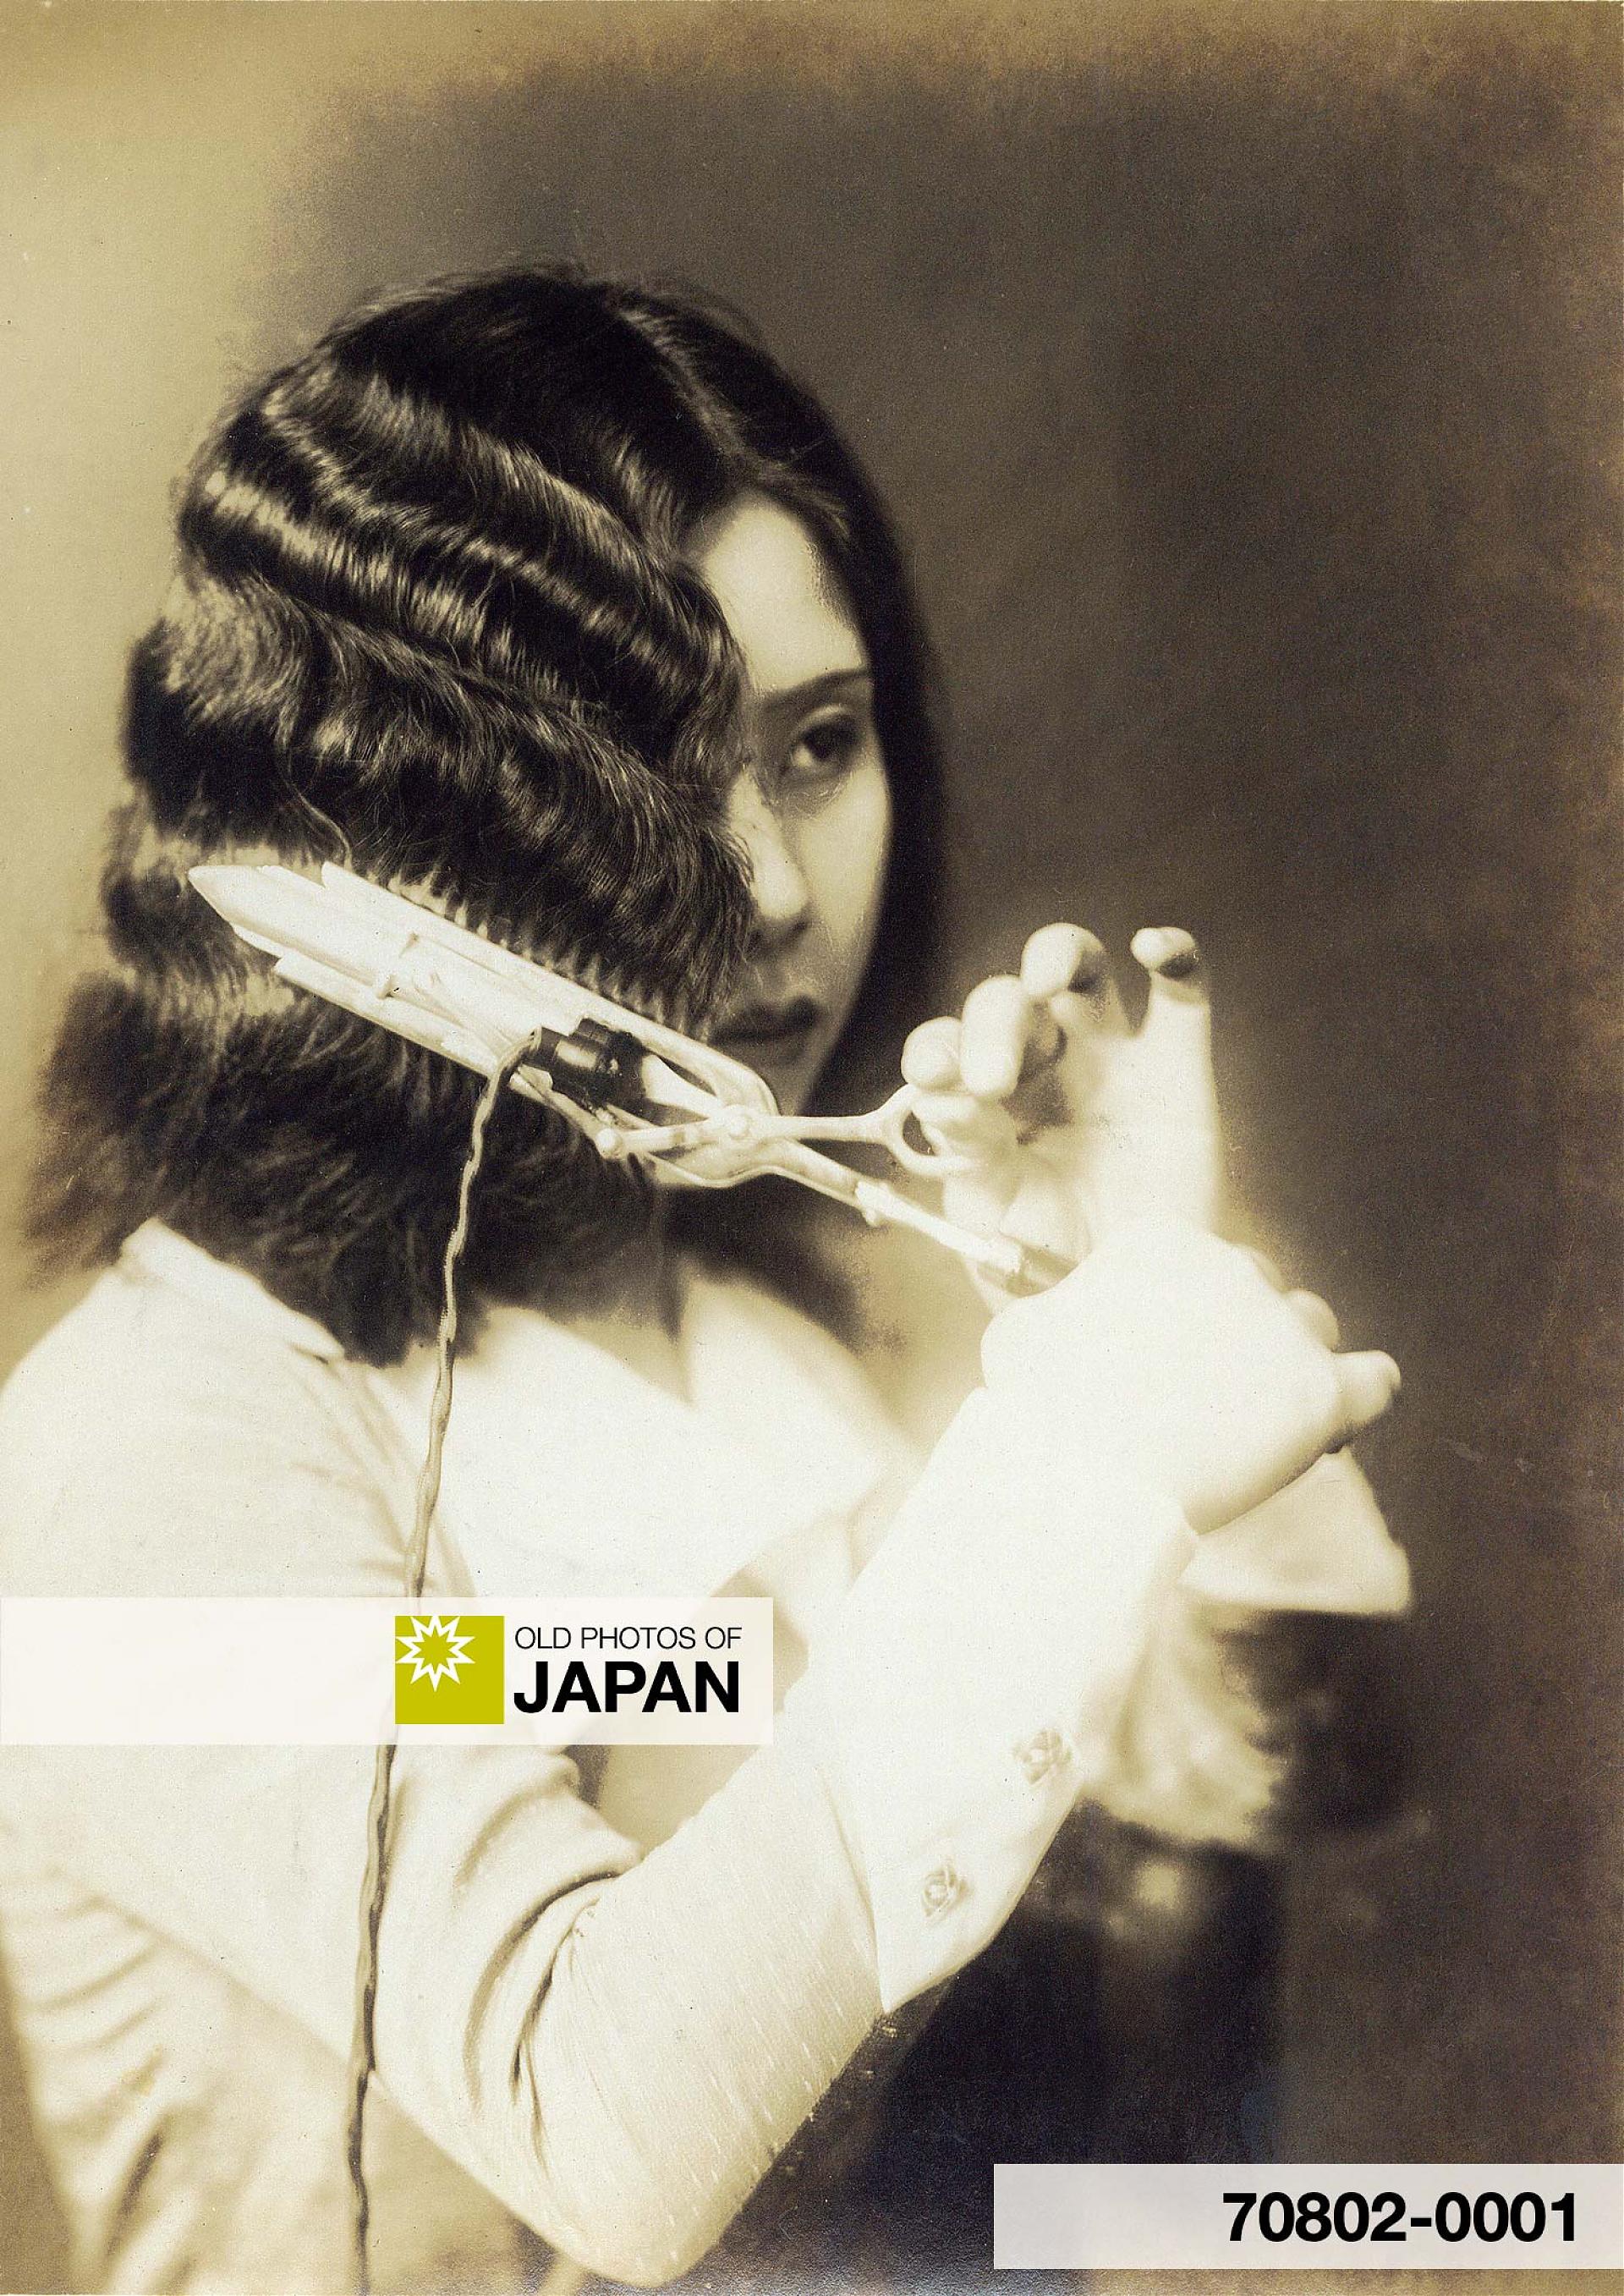 70802-0001 - Japanese Woman Curling Hair, 1920s